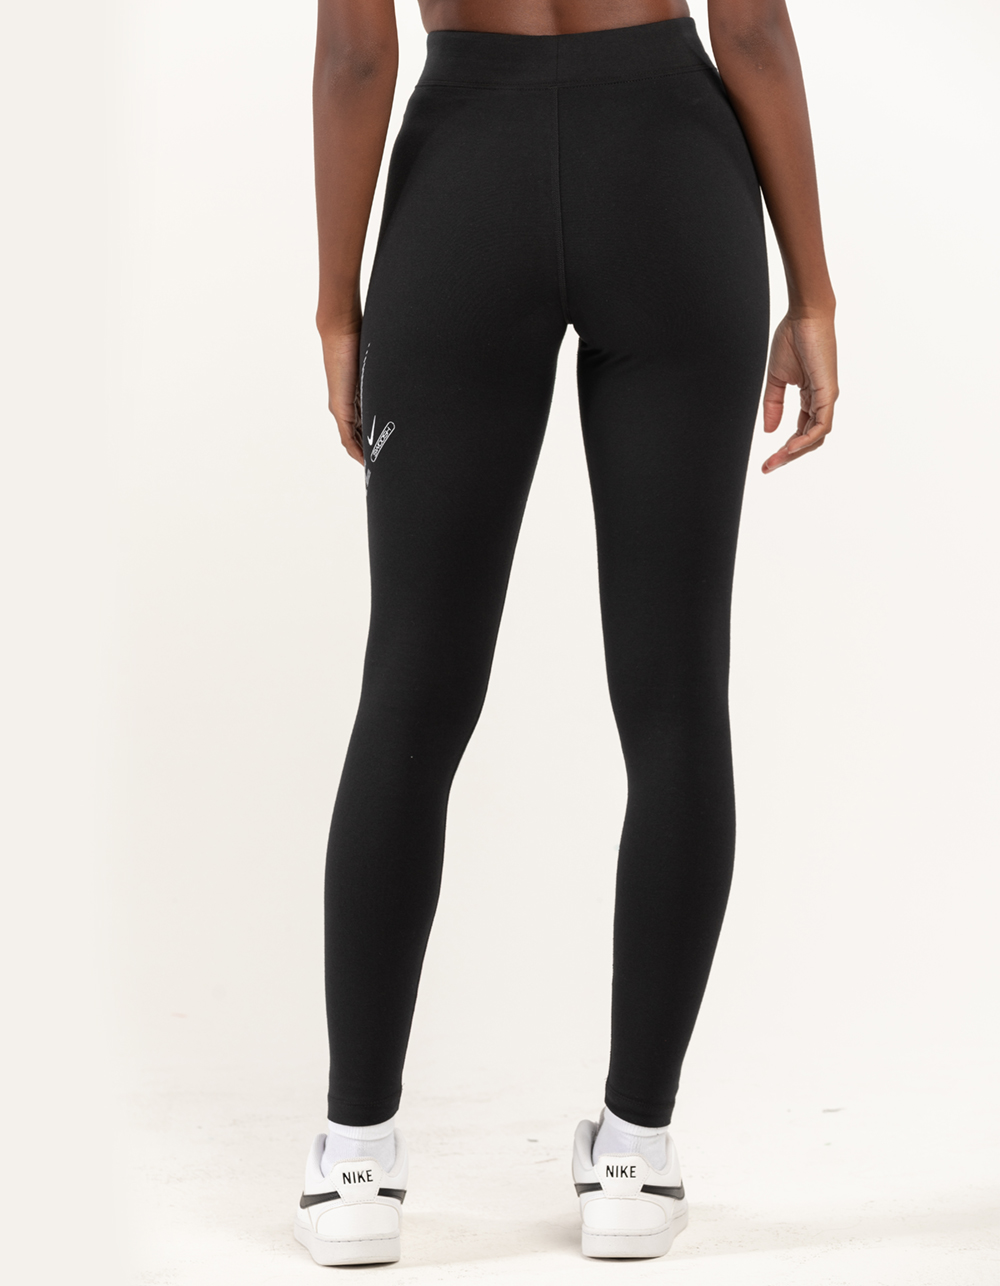 Nike leggings in black with swoosh print